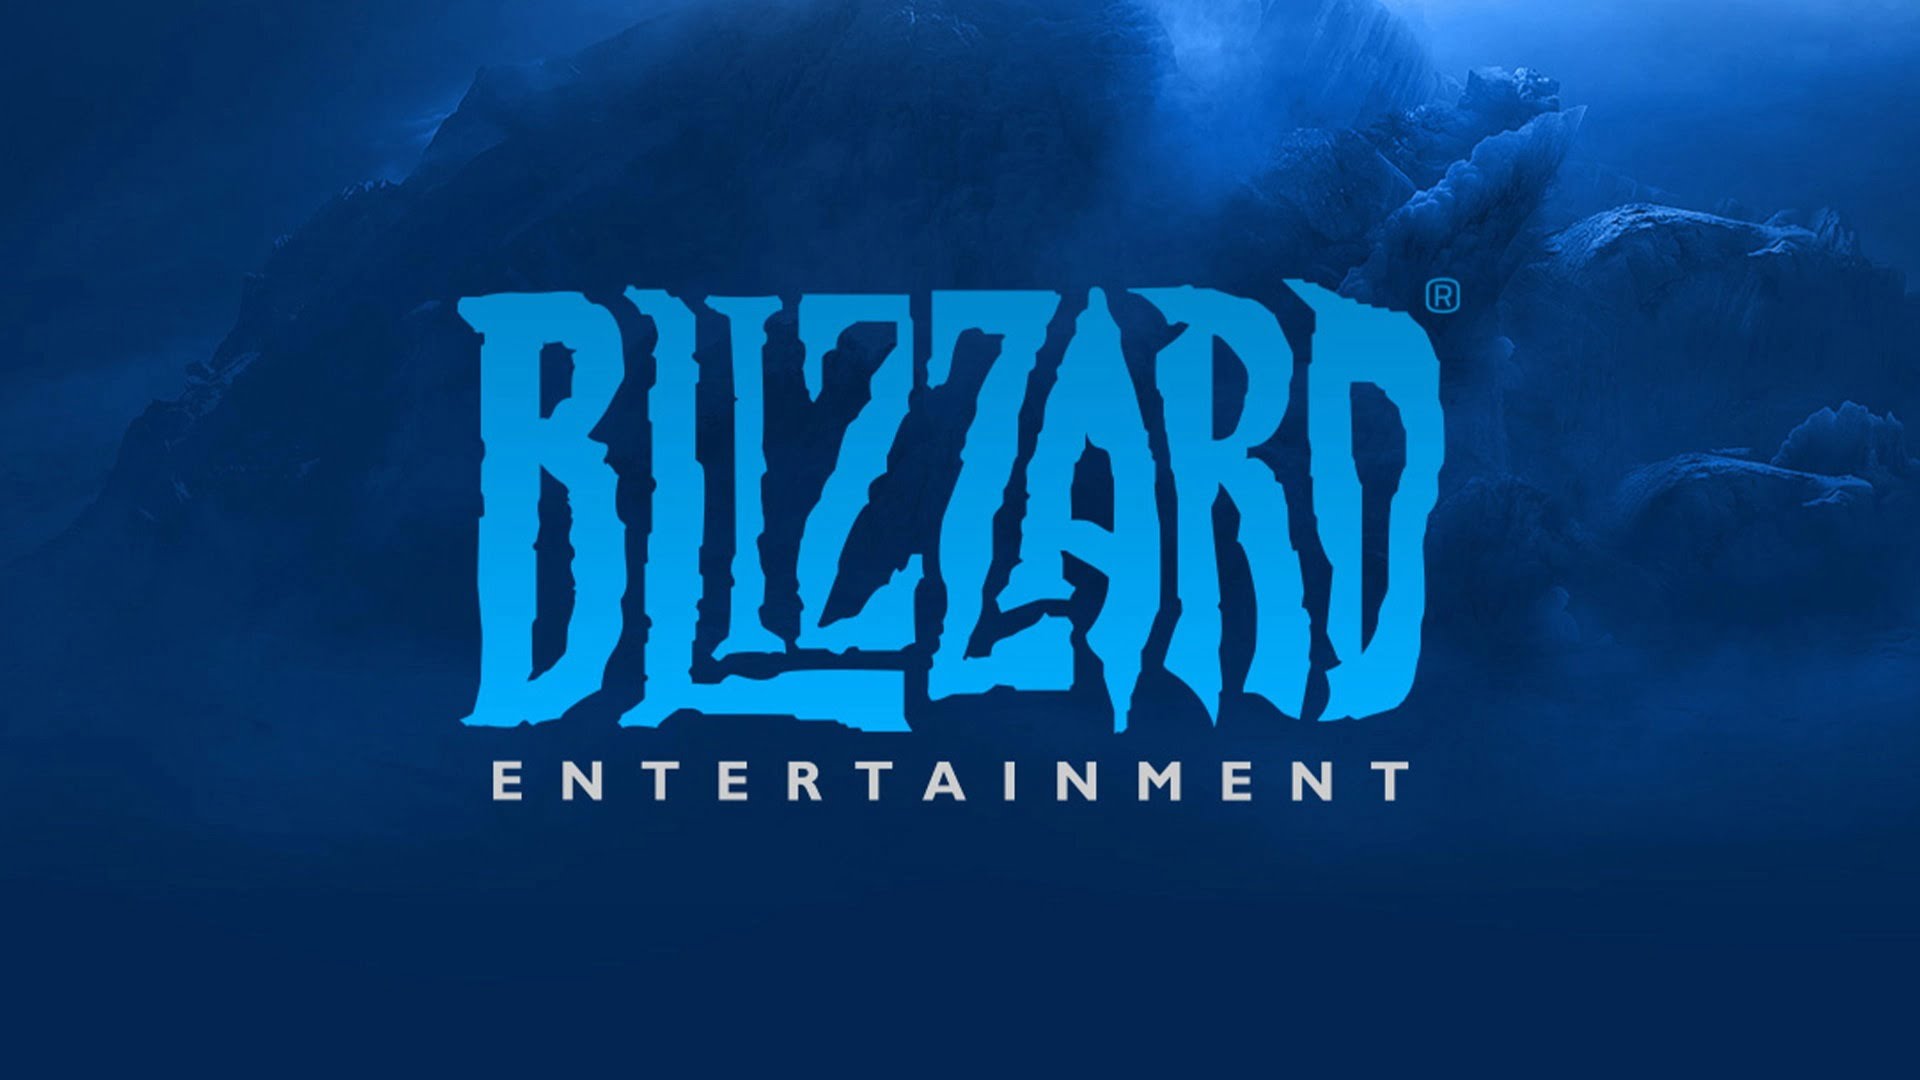 Na czym zarabia Activision Blizzard